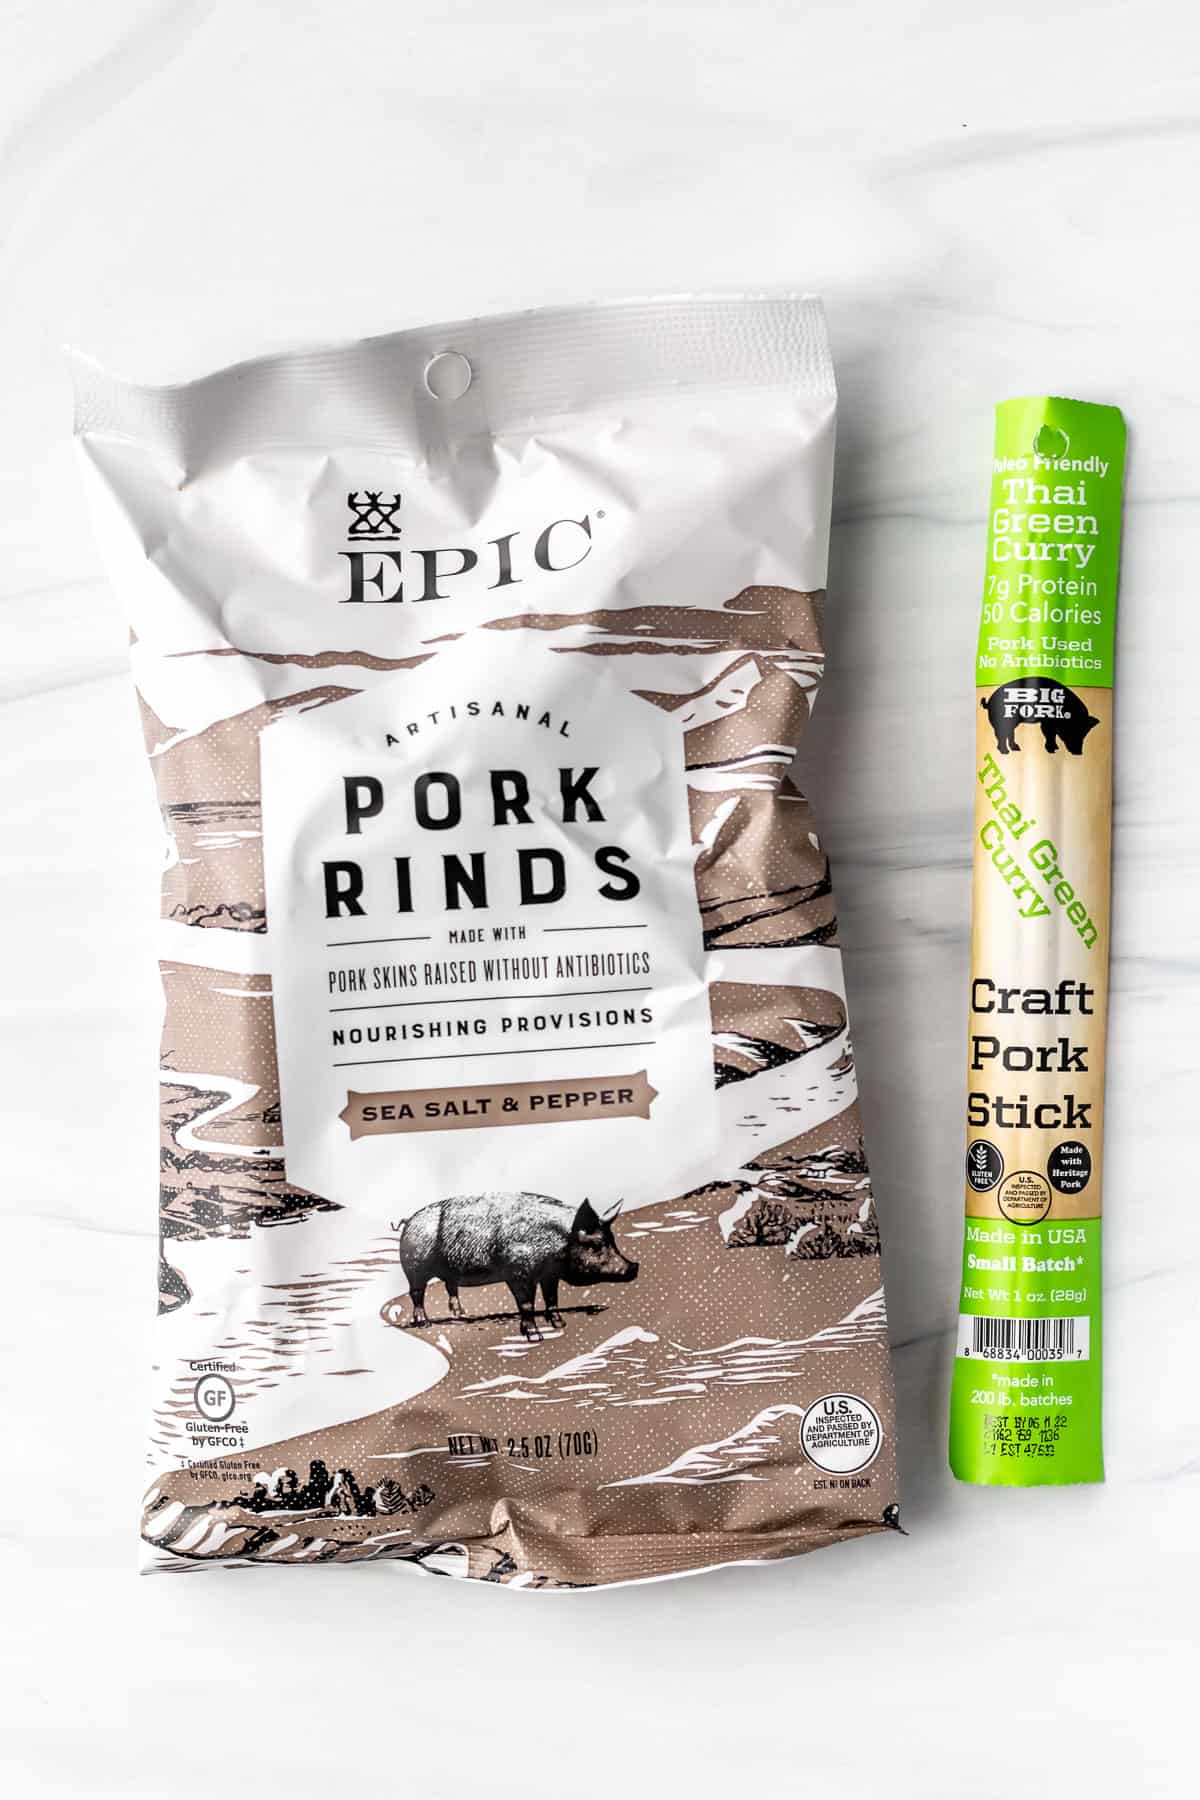 Pork rinds and a pork stick on a white background